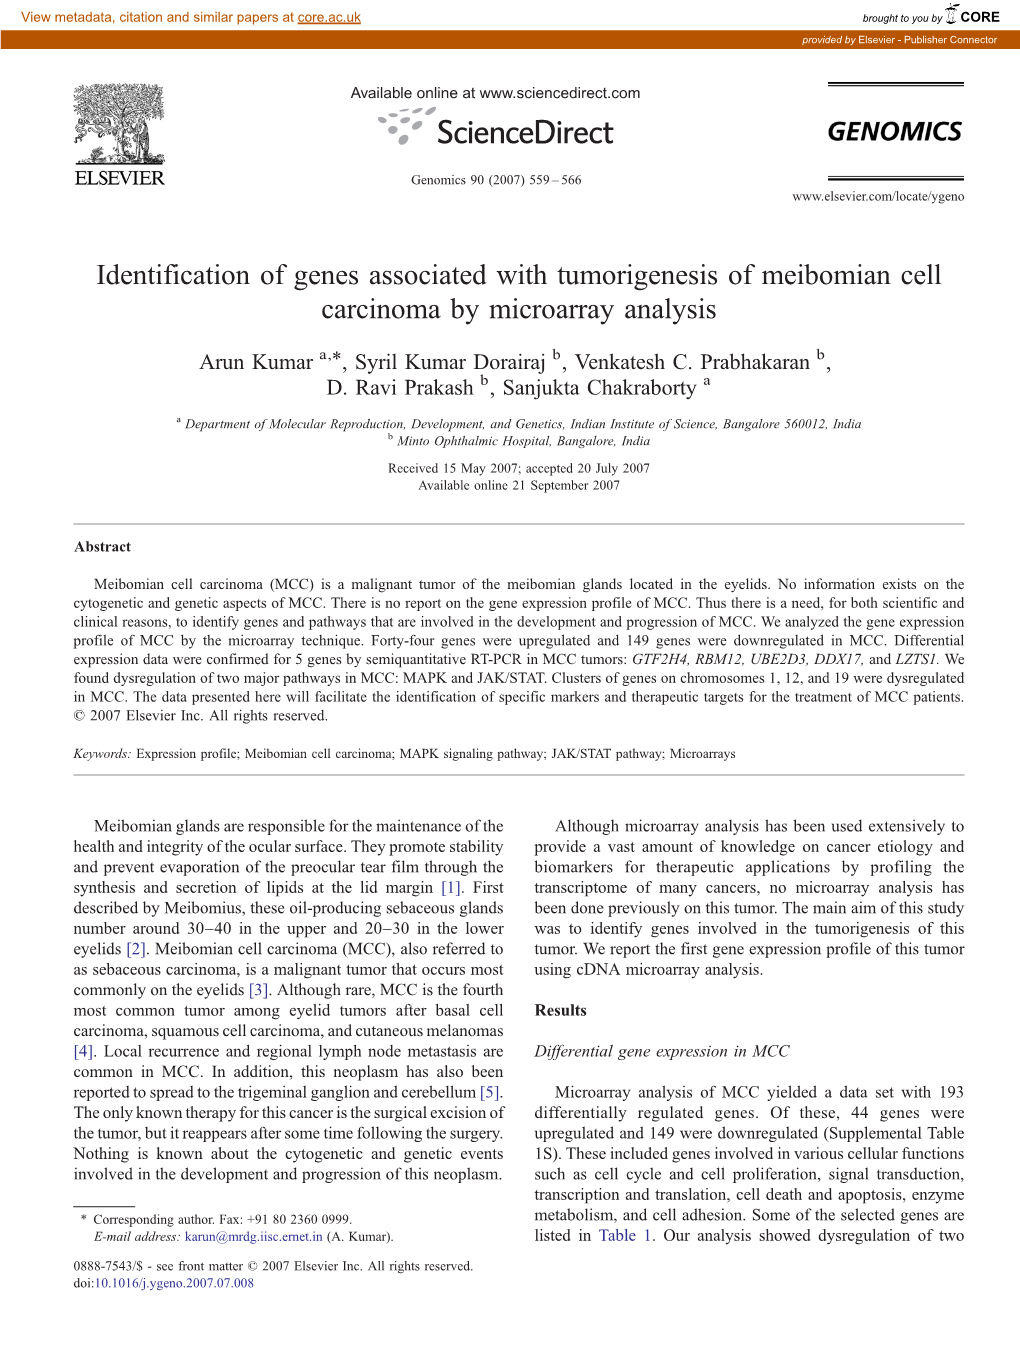 Identification of Genes Associated with Tumorigenesis of Meibomian Cell Carcinoma by Microarray Analysis ⁎ Arun Kumar A, , Syril Kumar Dorairaj B, Venkatesh C